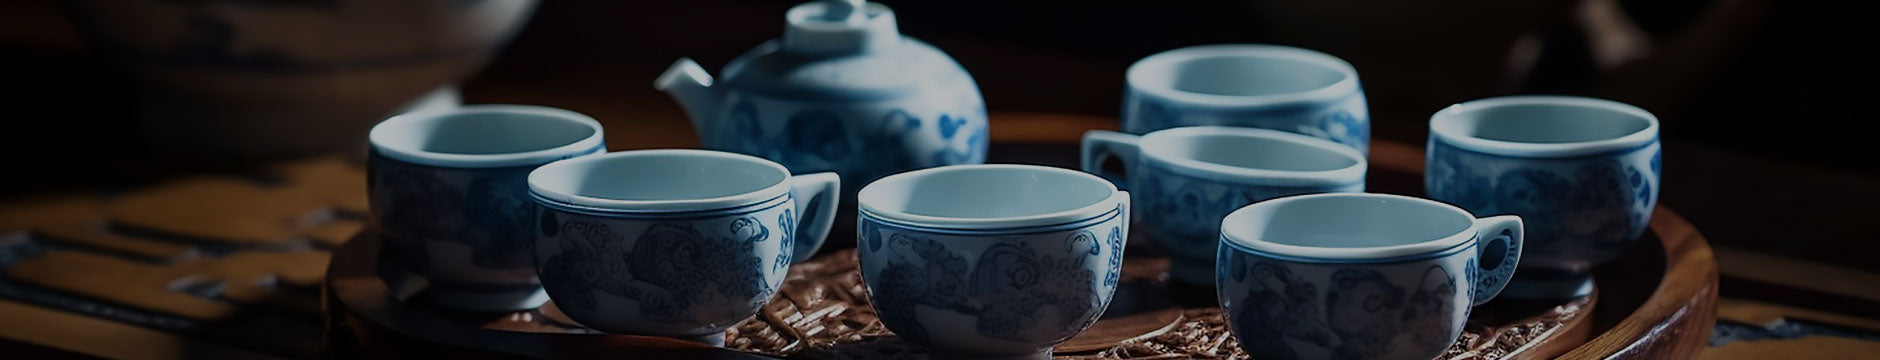 Premium Quality Traditional Teaware